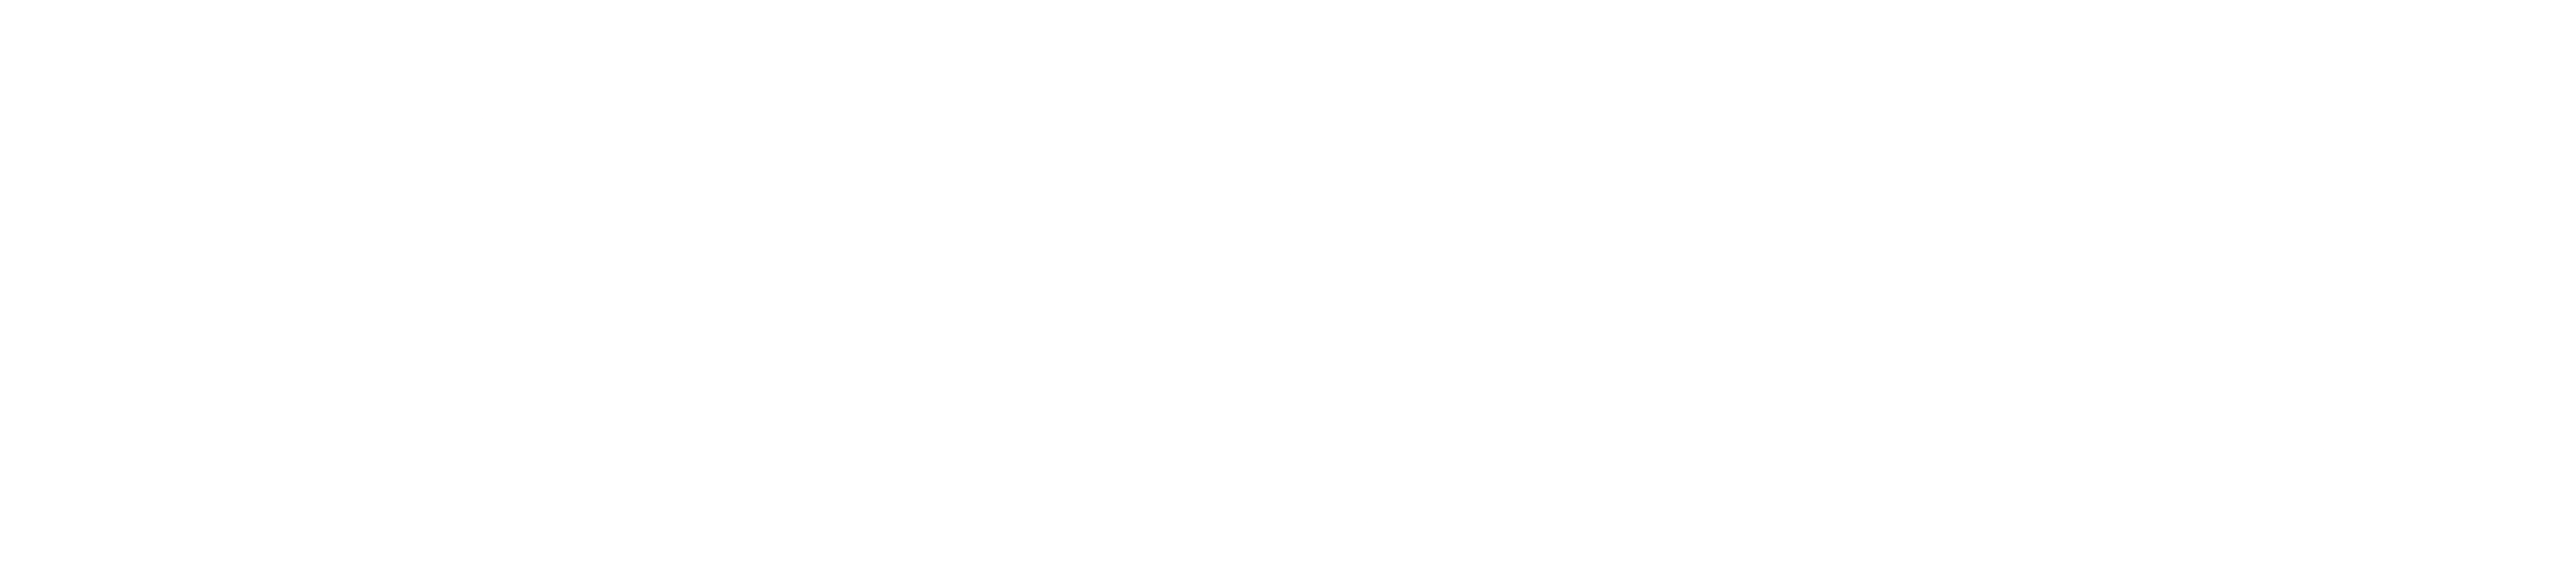 daytatech-logo-white